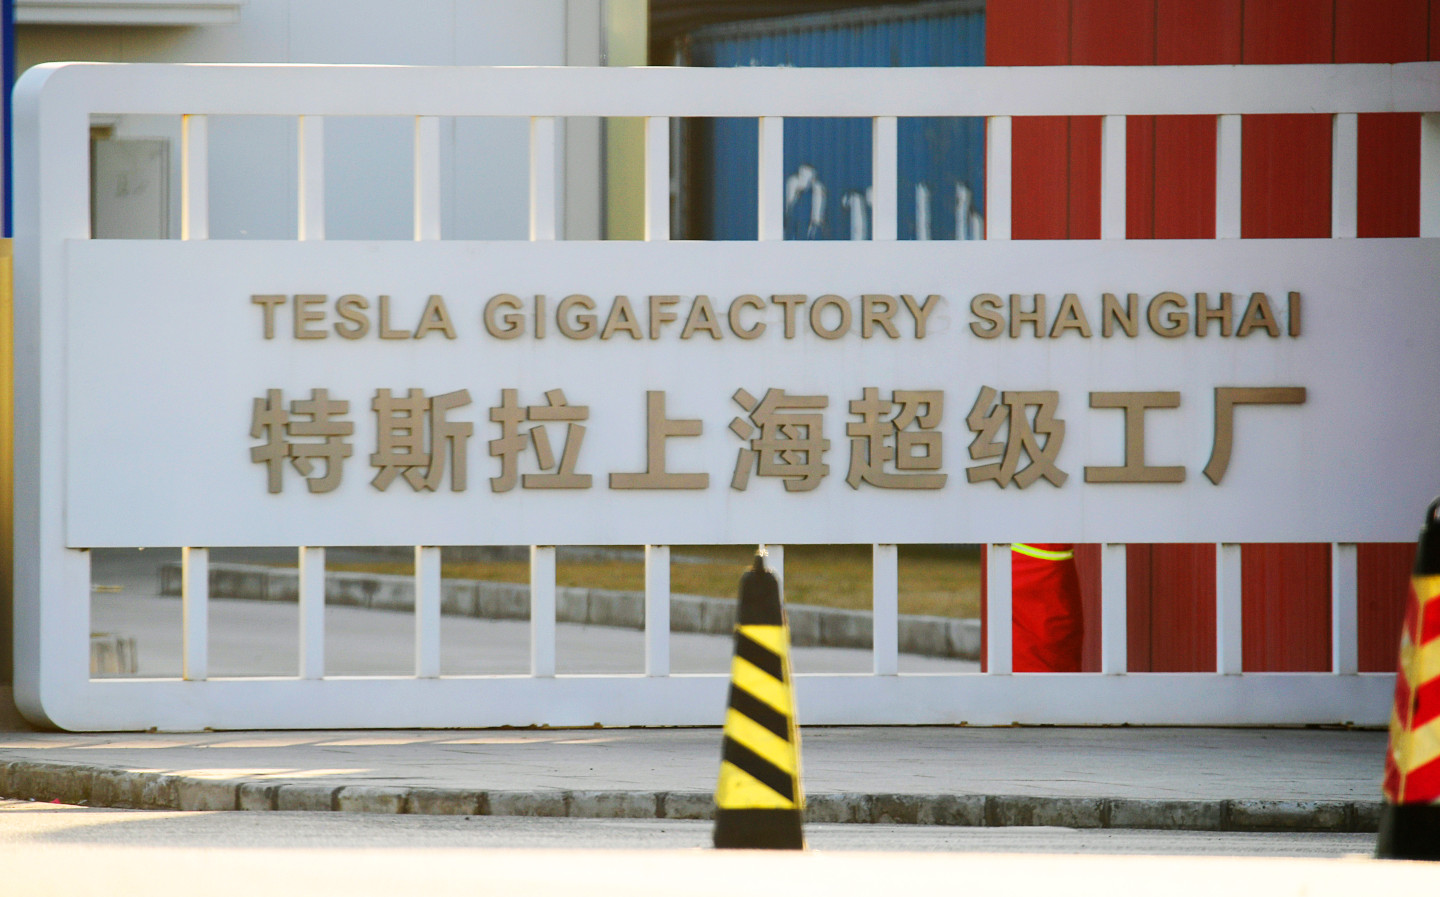 The Tesla Gigafactory in Shanghai